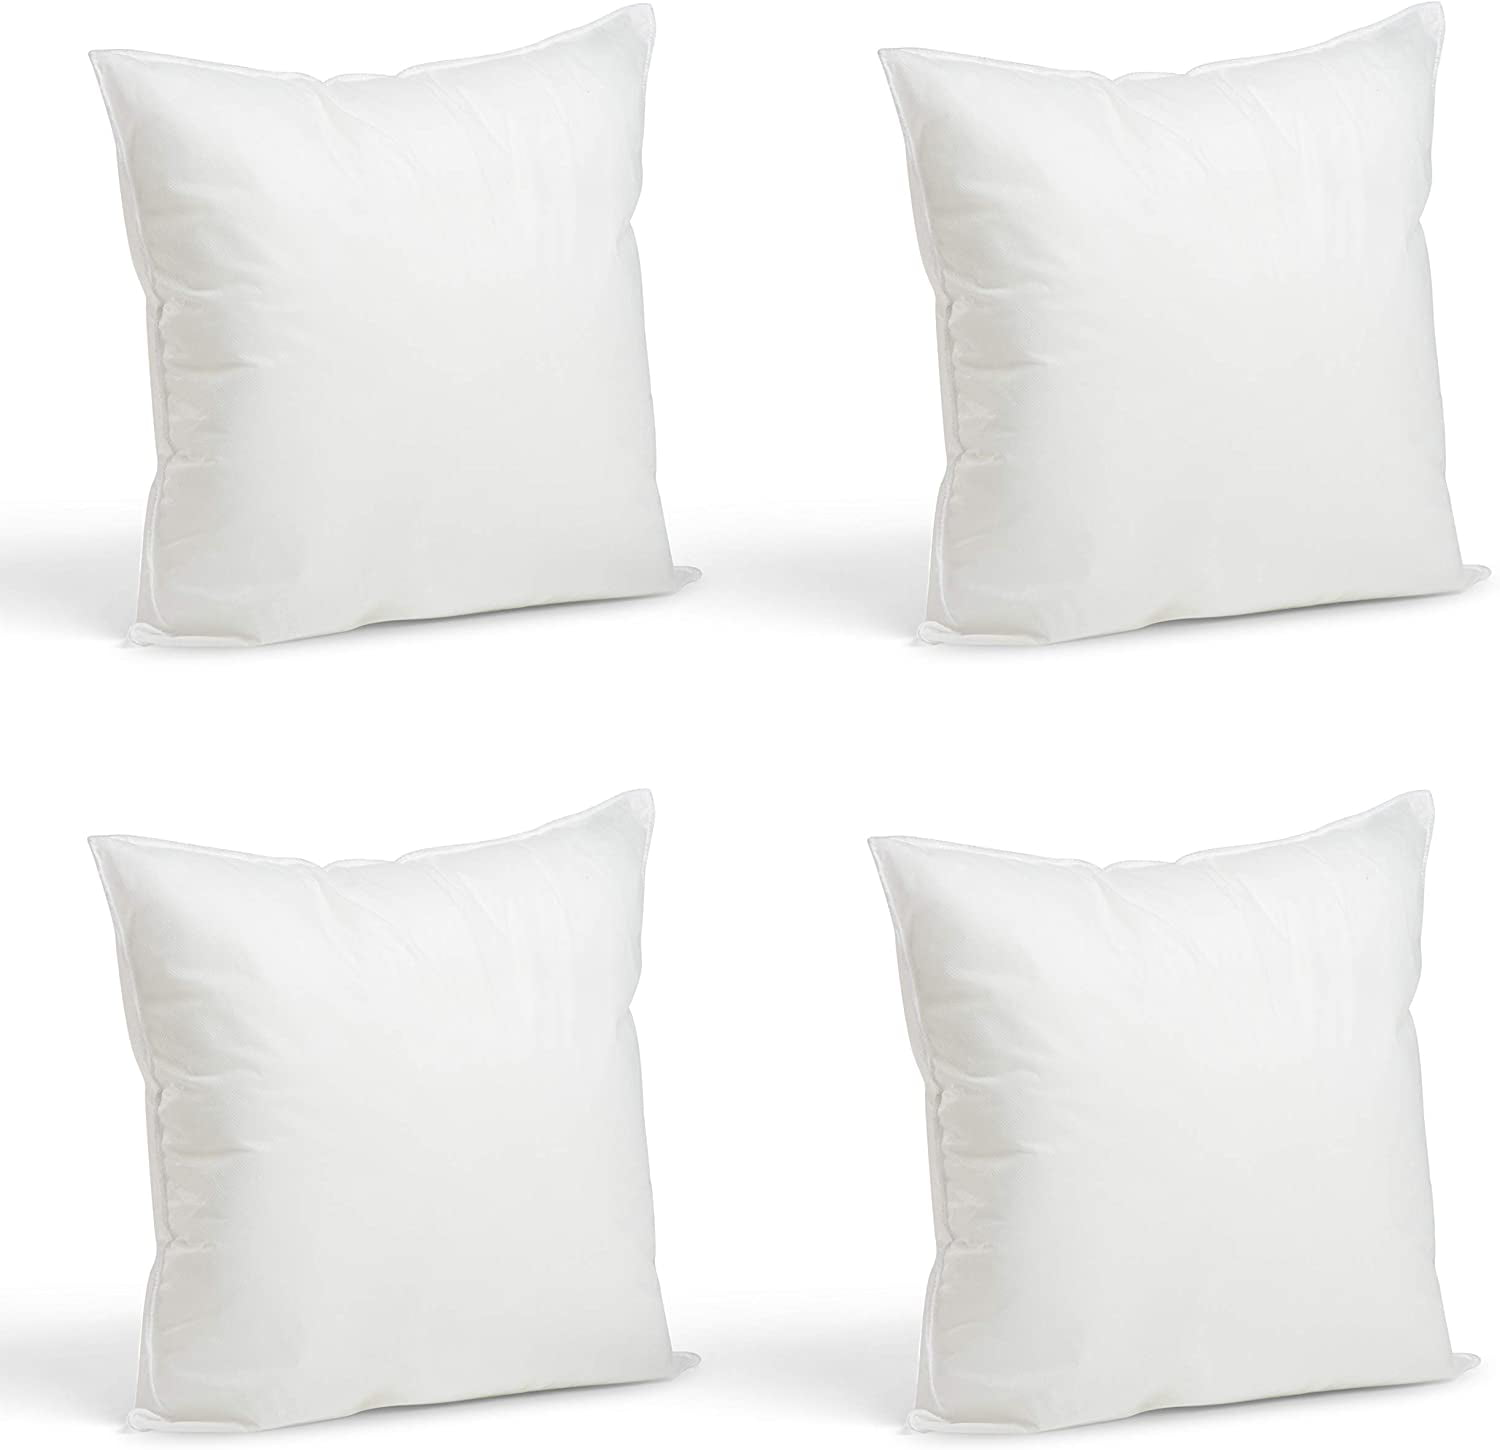 Foamily Premium Hypoallergenic Stuffer Pillow Insert Sham Square Form Polyester 26 L X 26 W Standard/White 